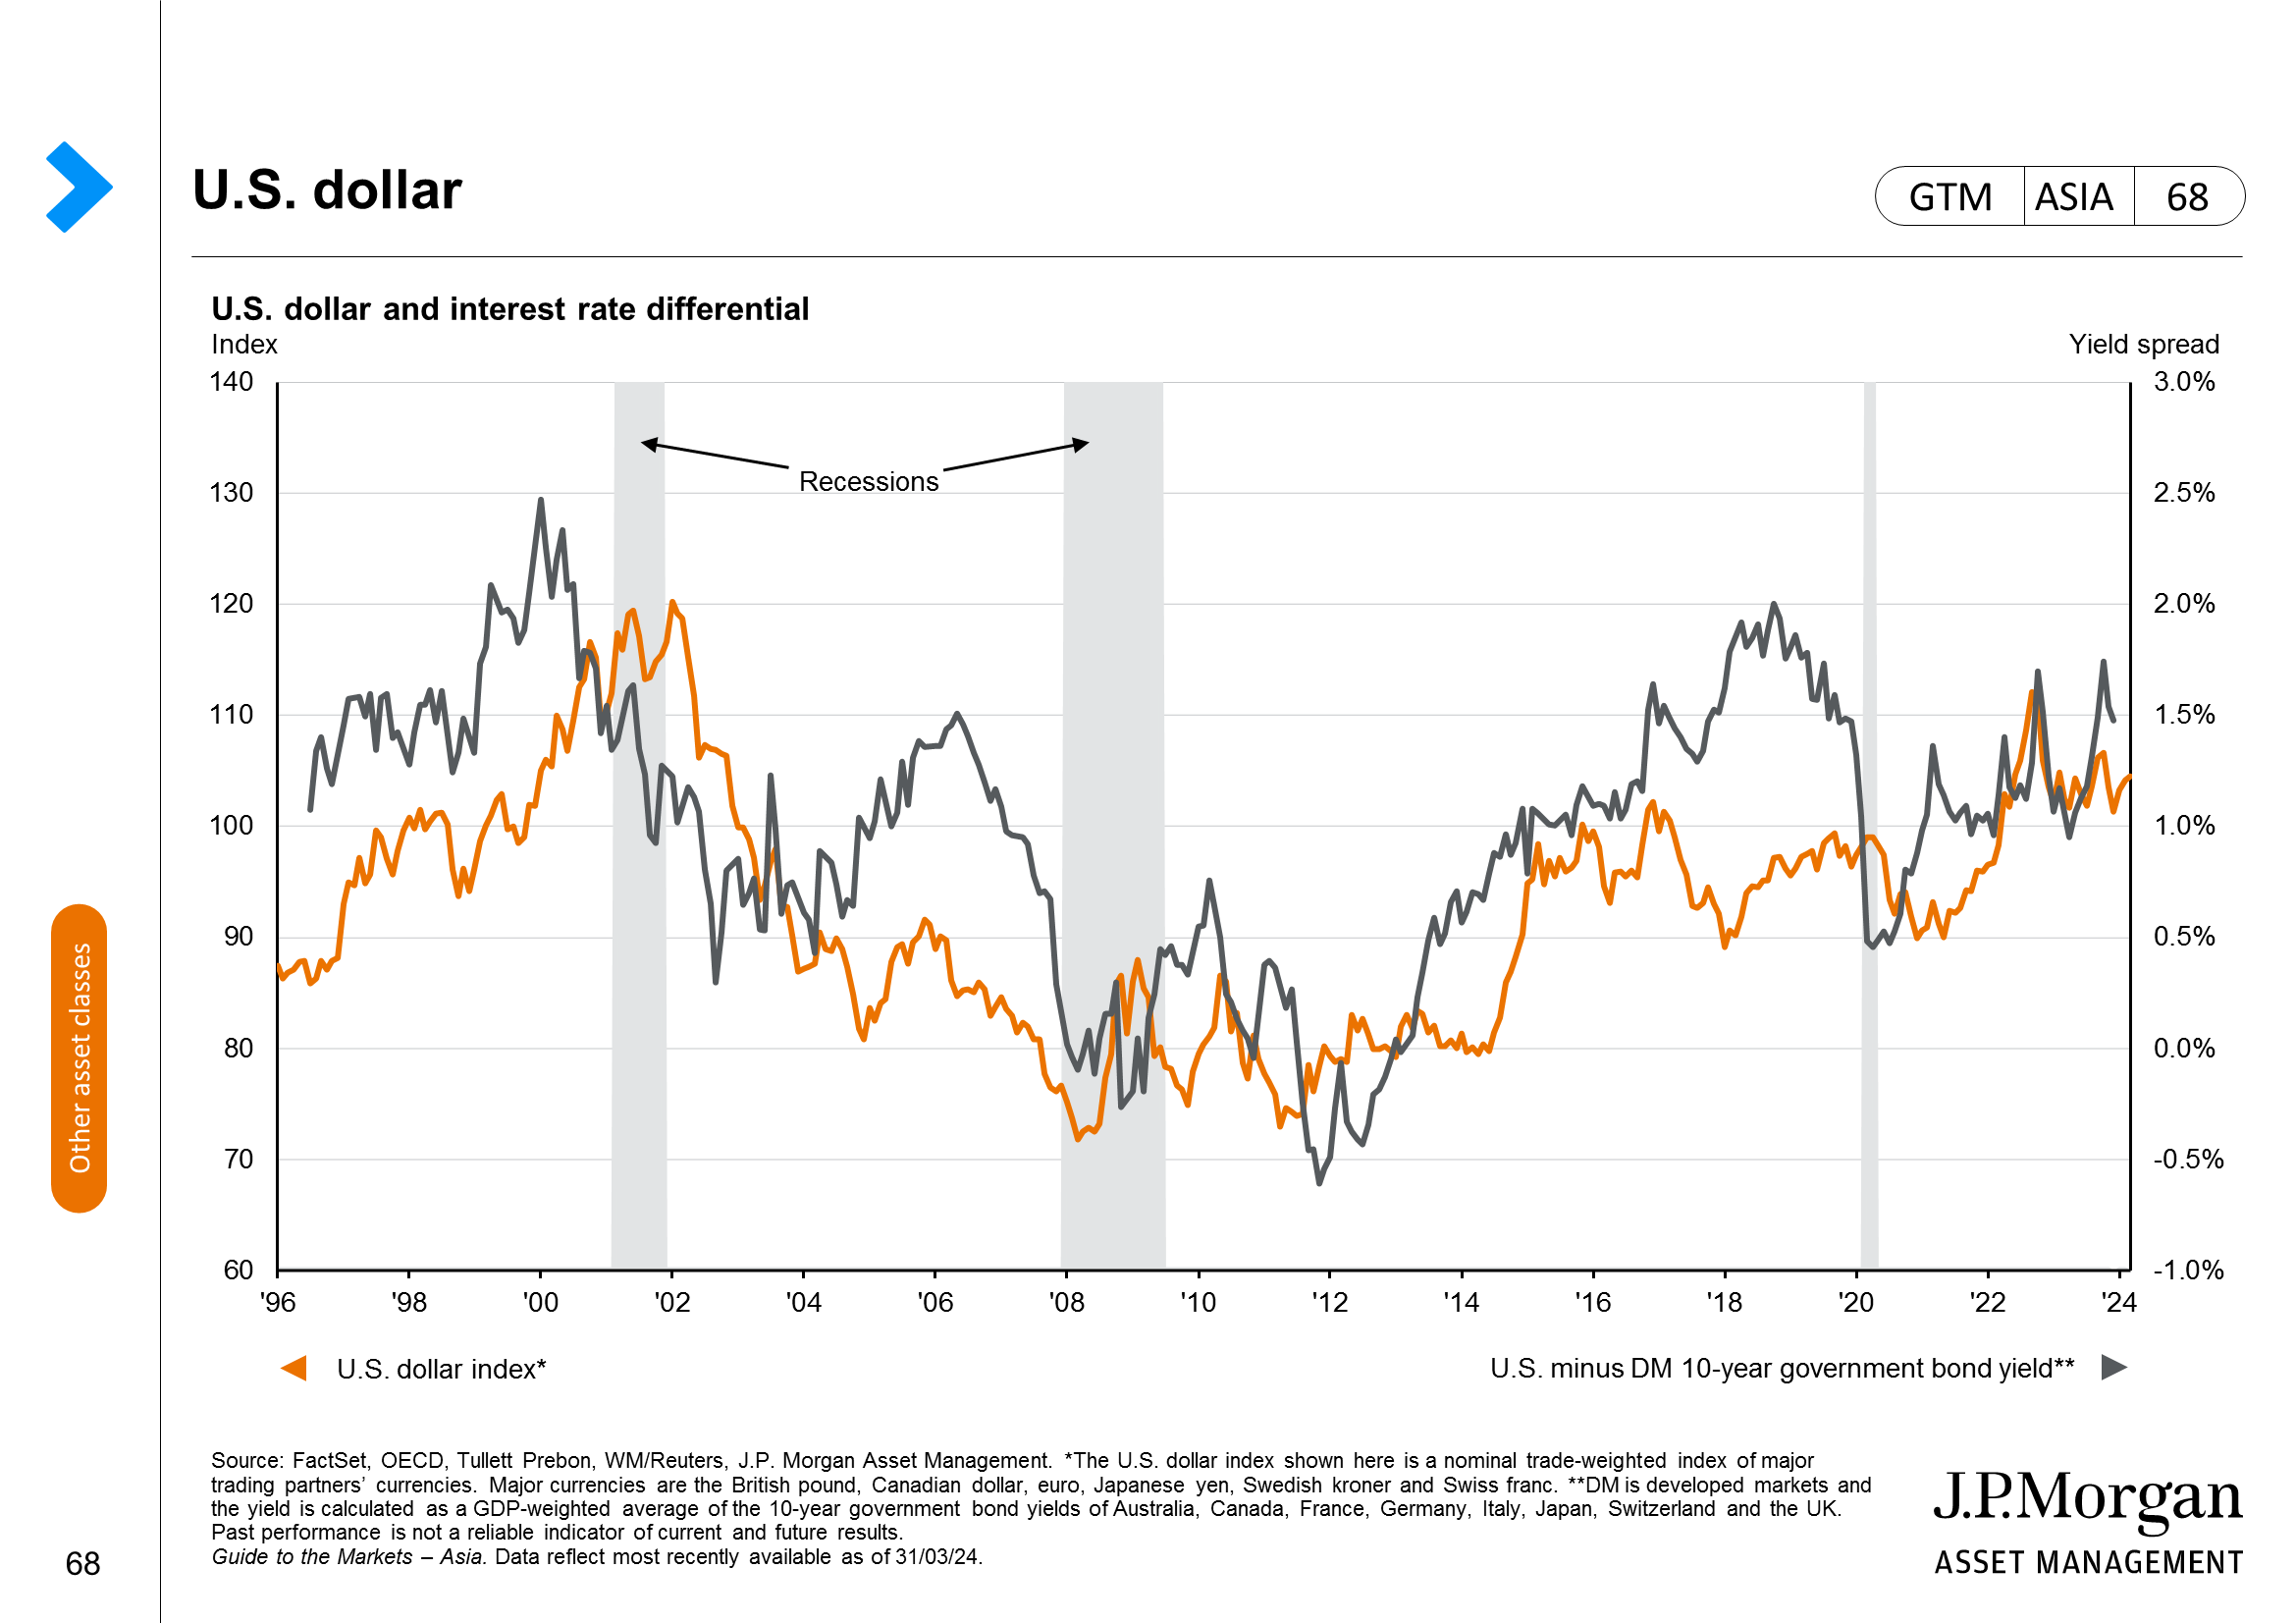 Oil: Short-term market dynamics